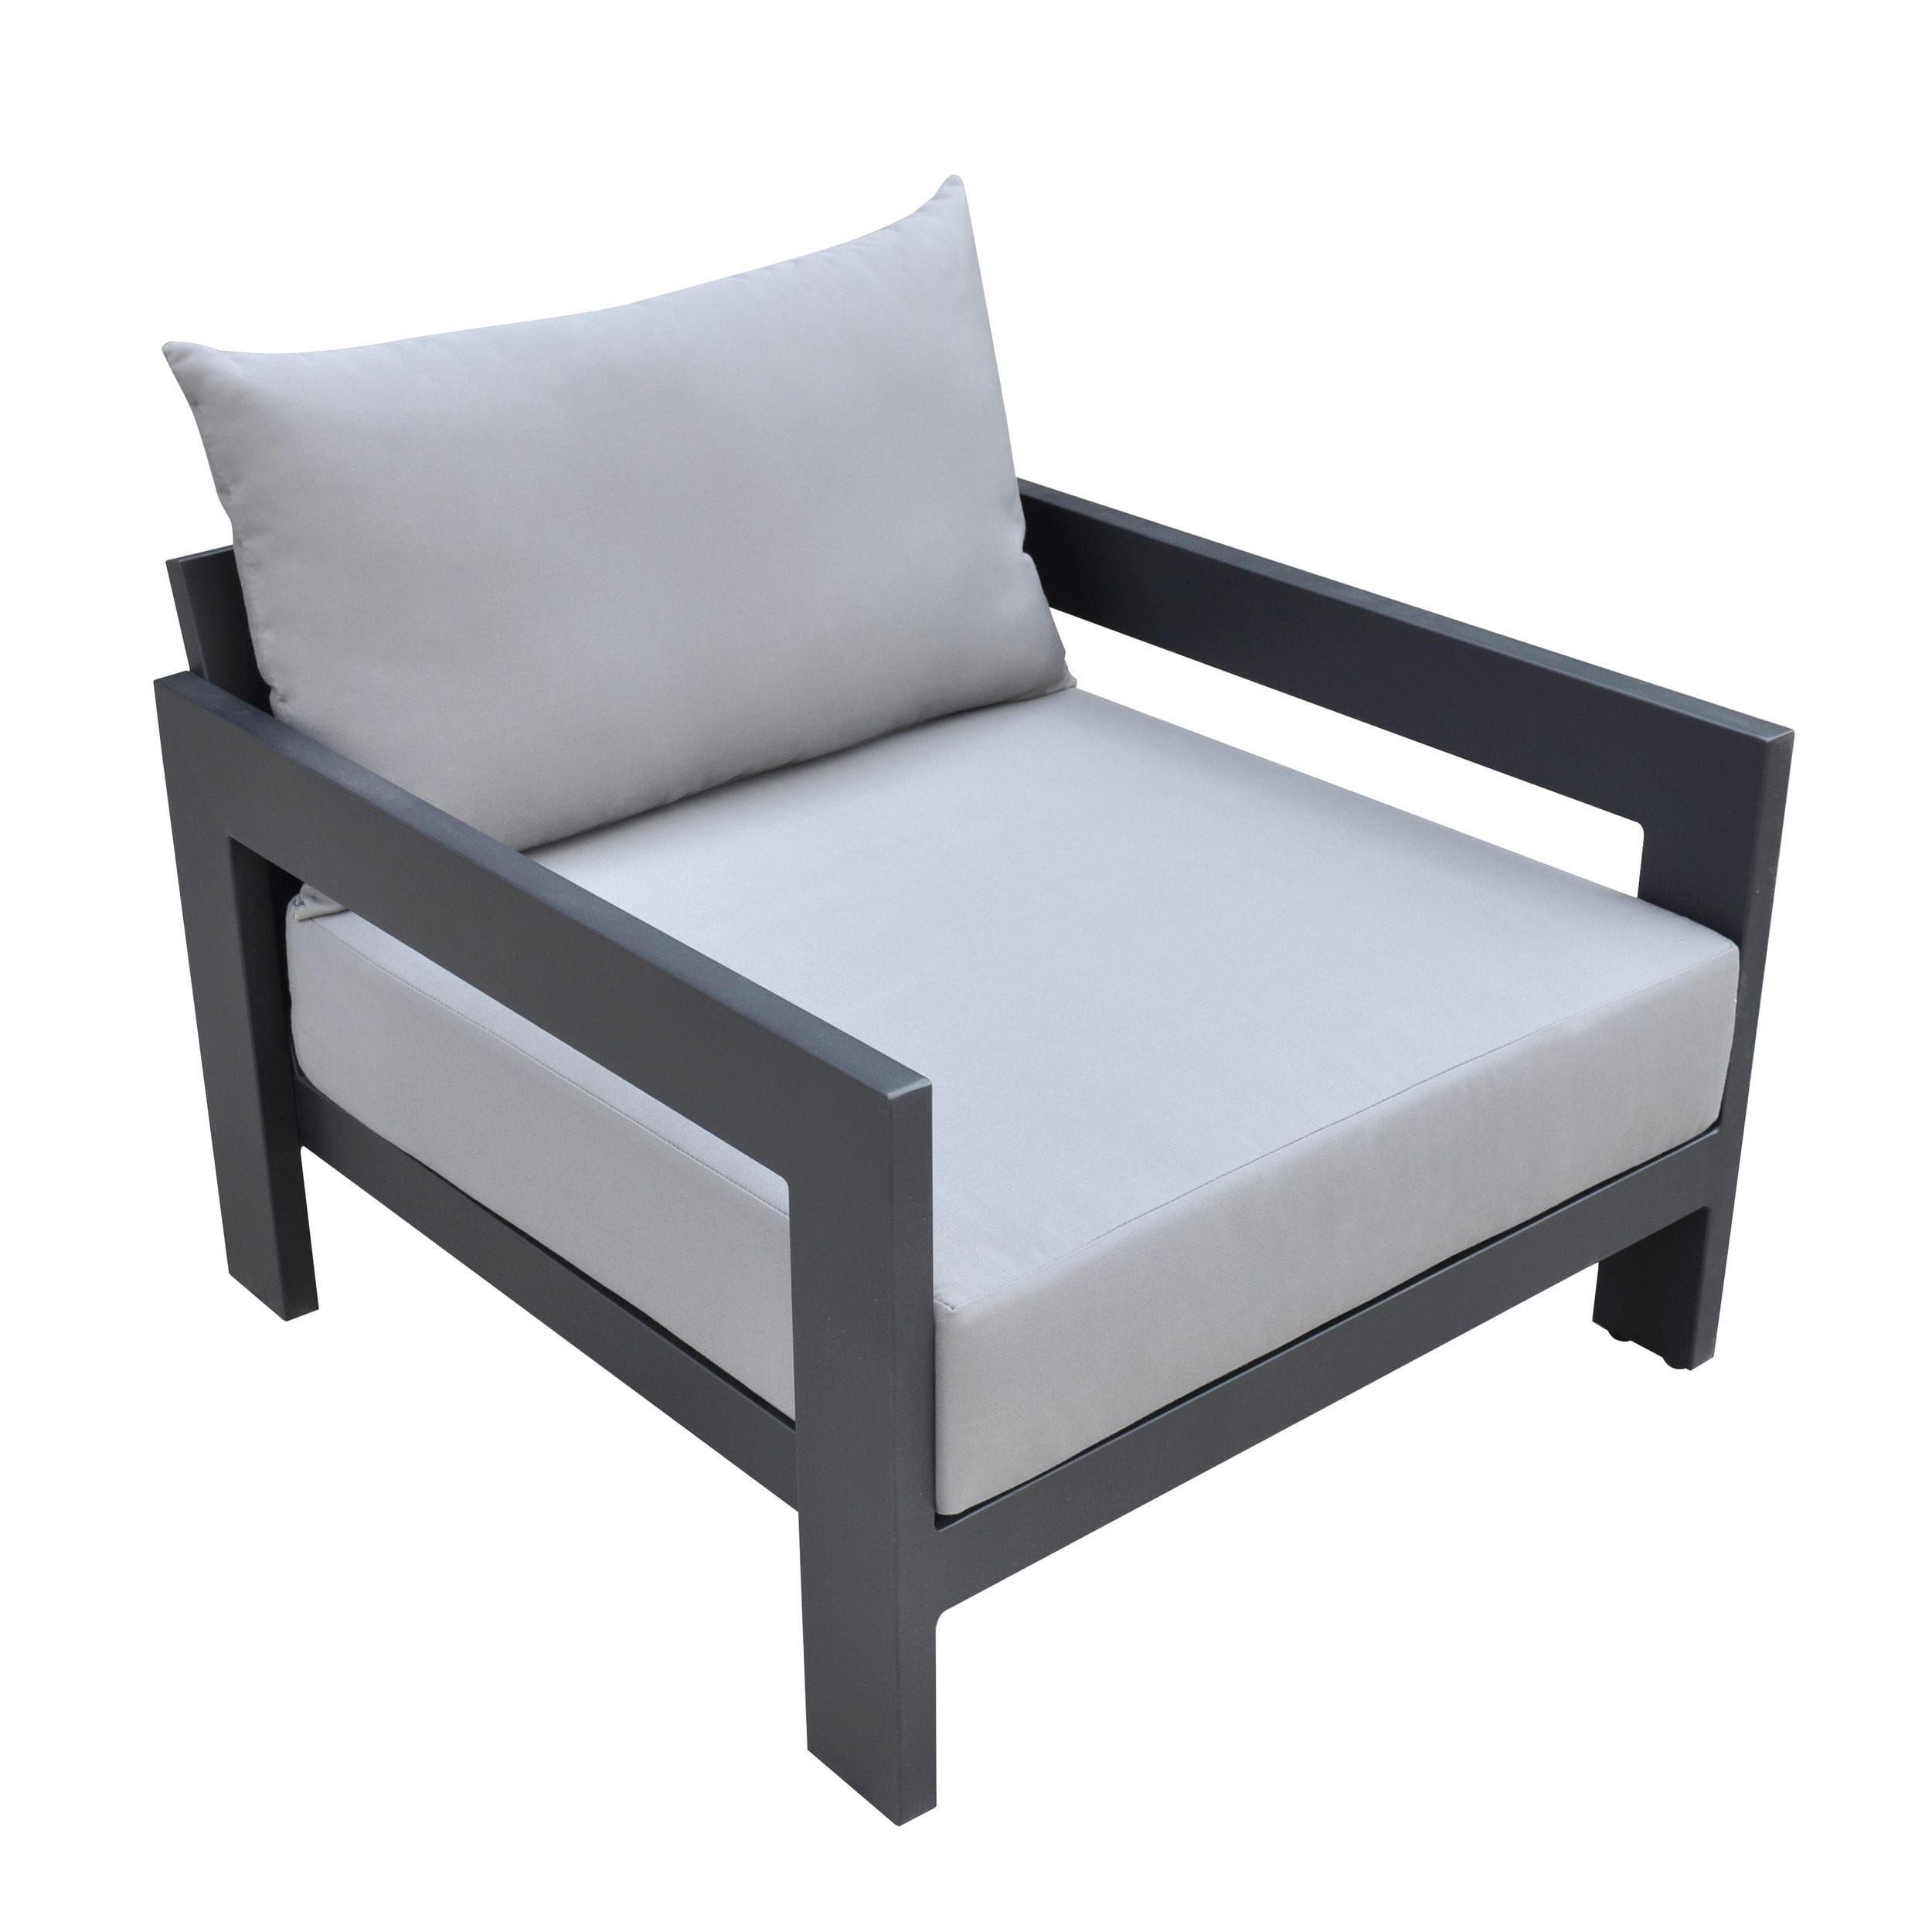 

    
26518977849898Renava Wake Outdoor Lounge Chair VGGEMONTALK-GREY-CH Lounge Chair
